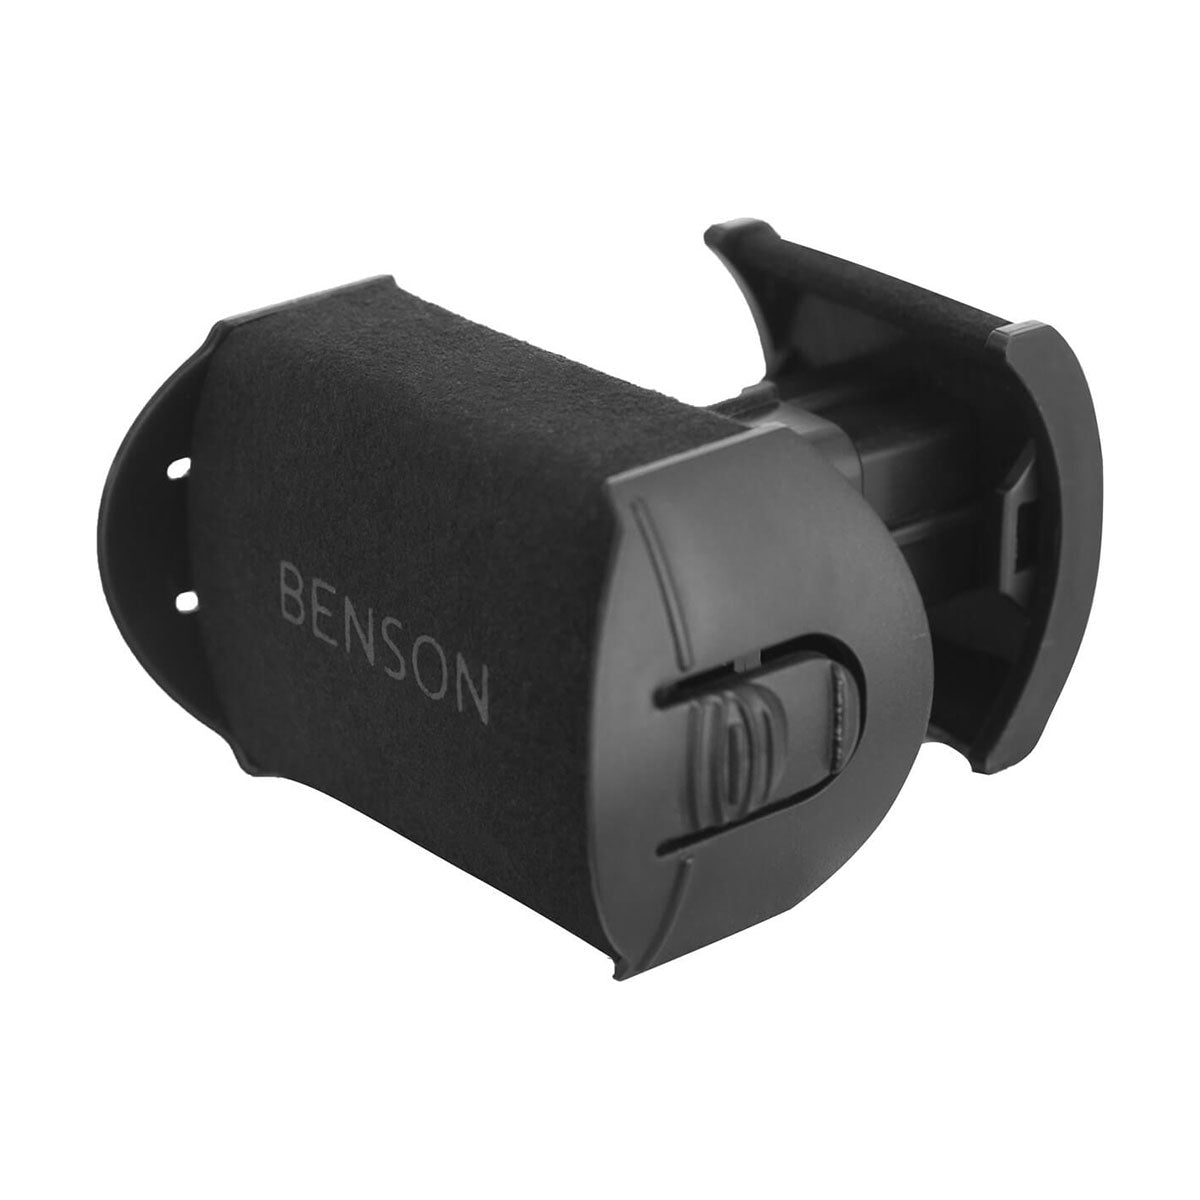 Benson Black Series 6.16 - Watch winder for 6 watches